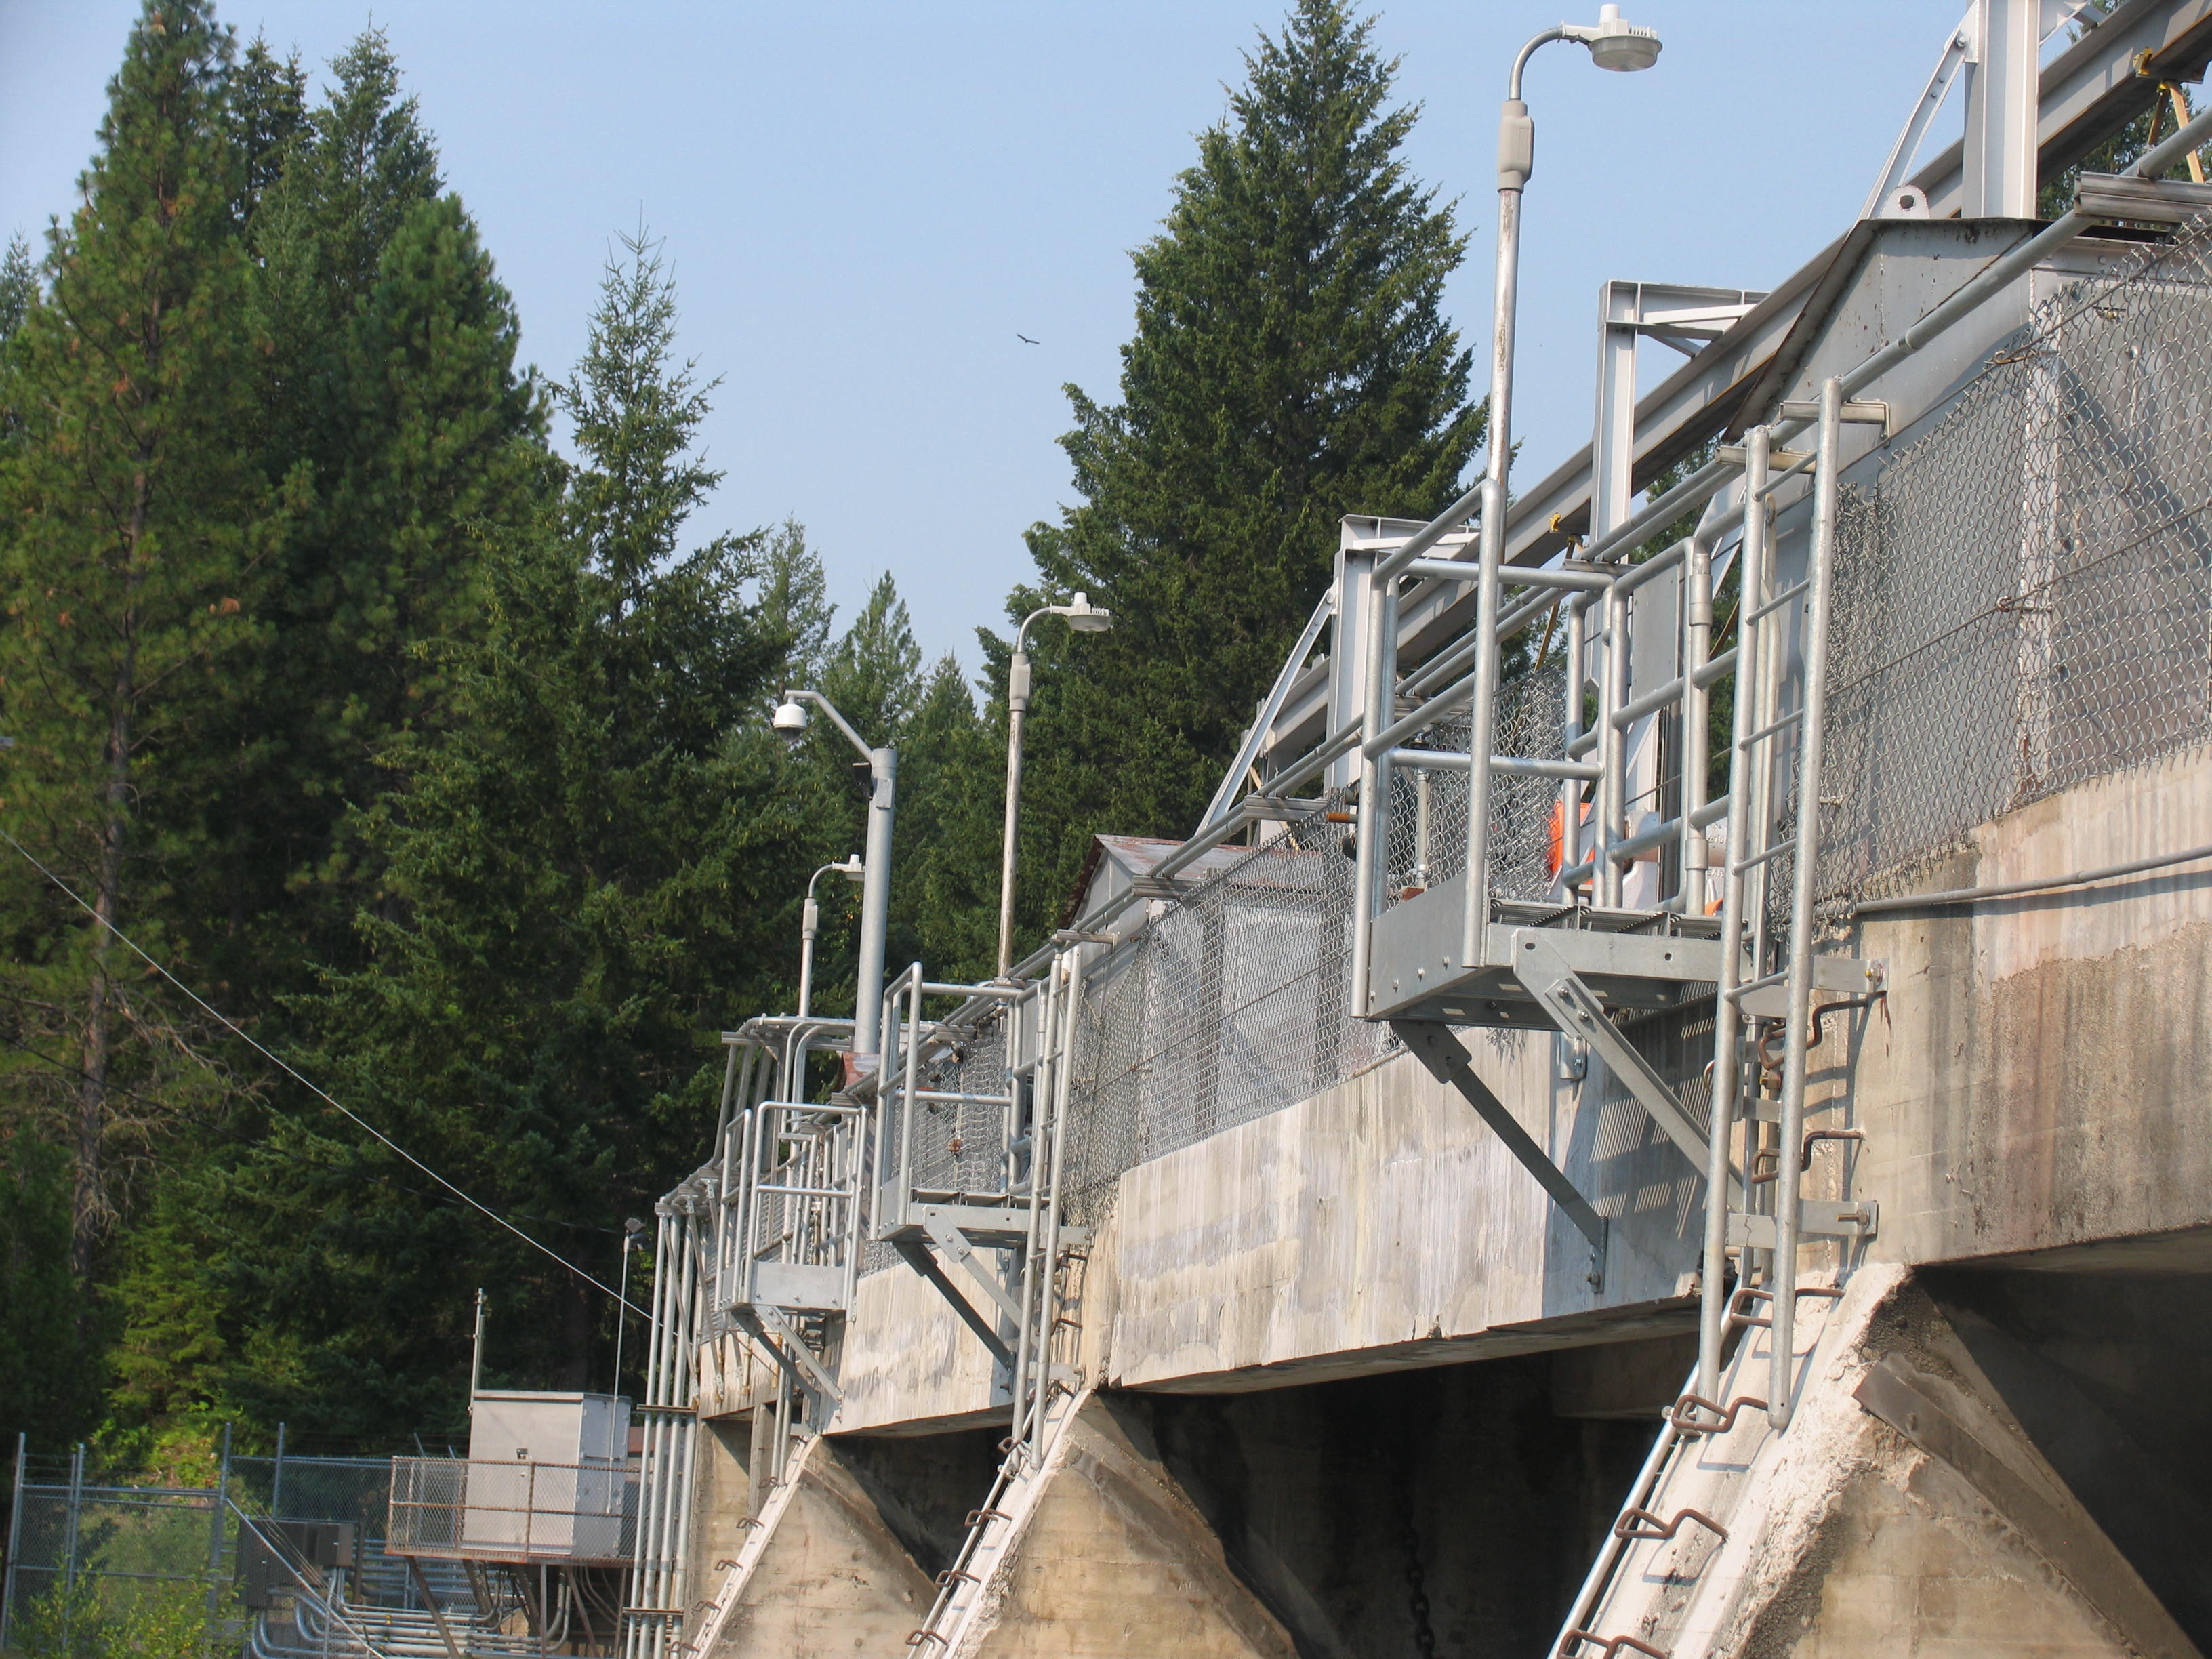 North Folk Dam Access Platforms